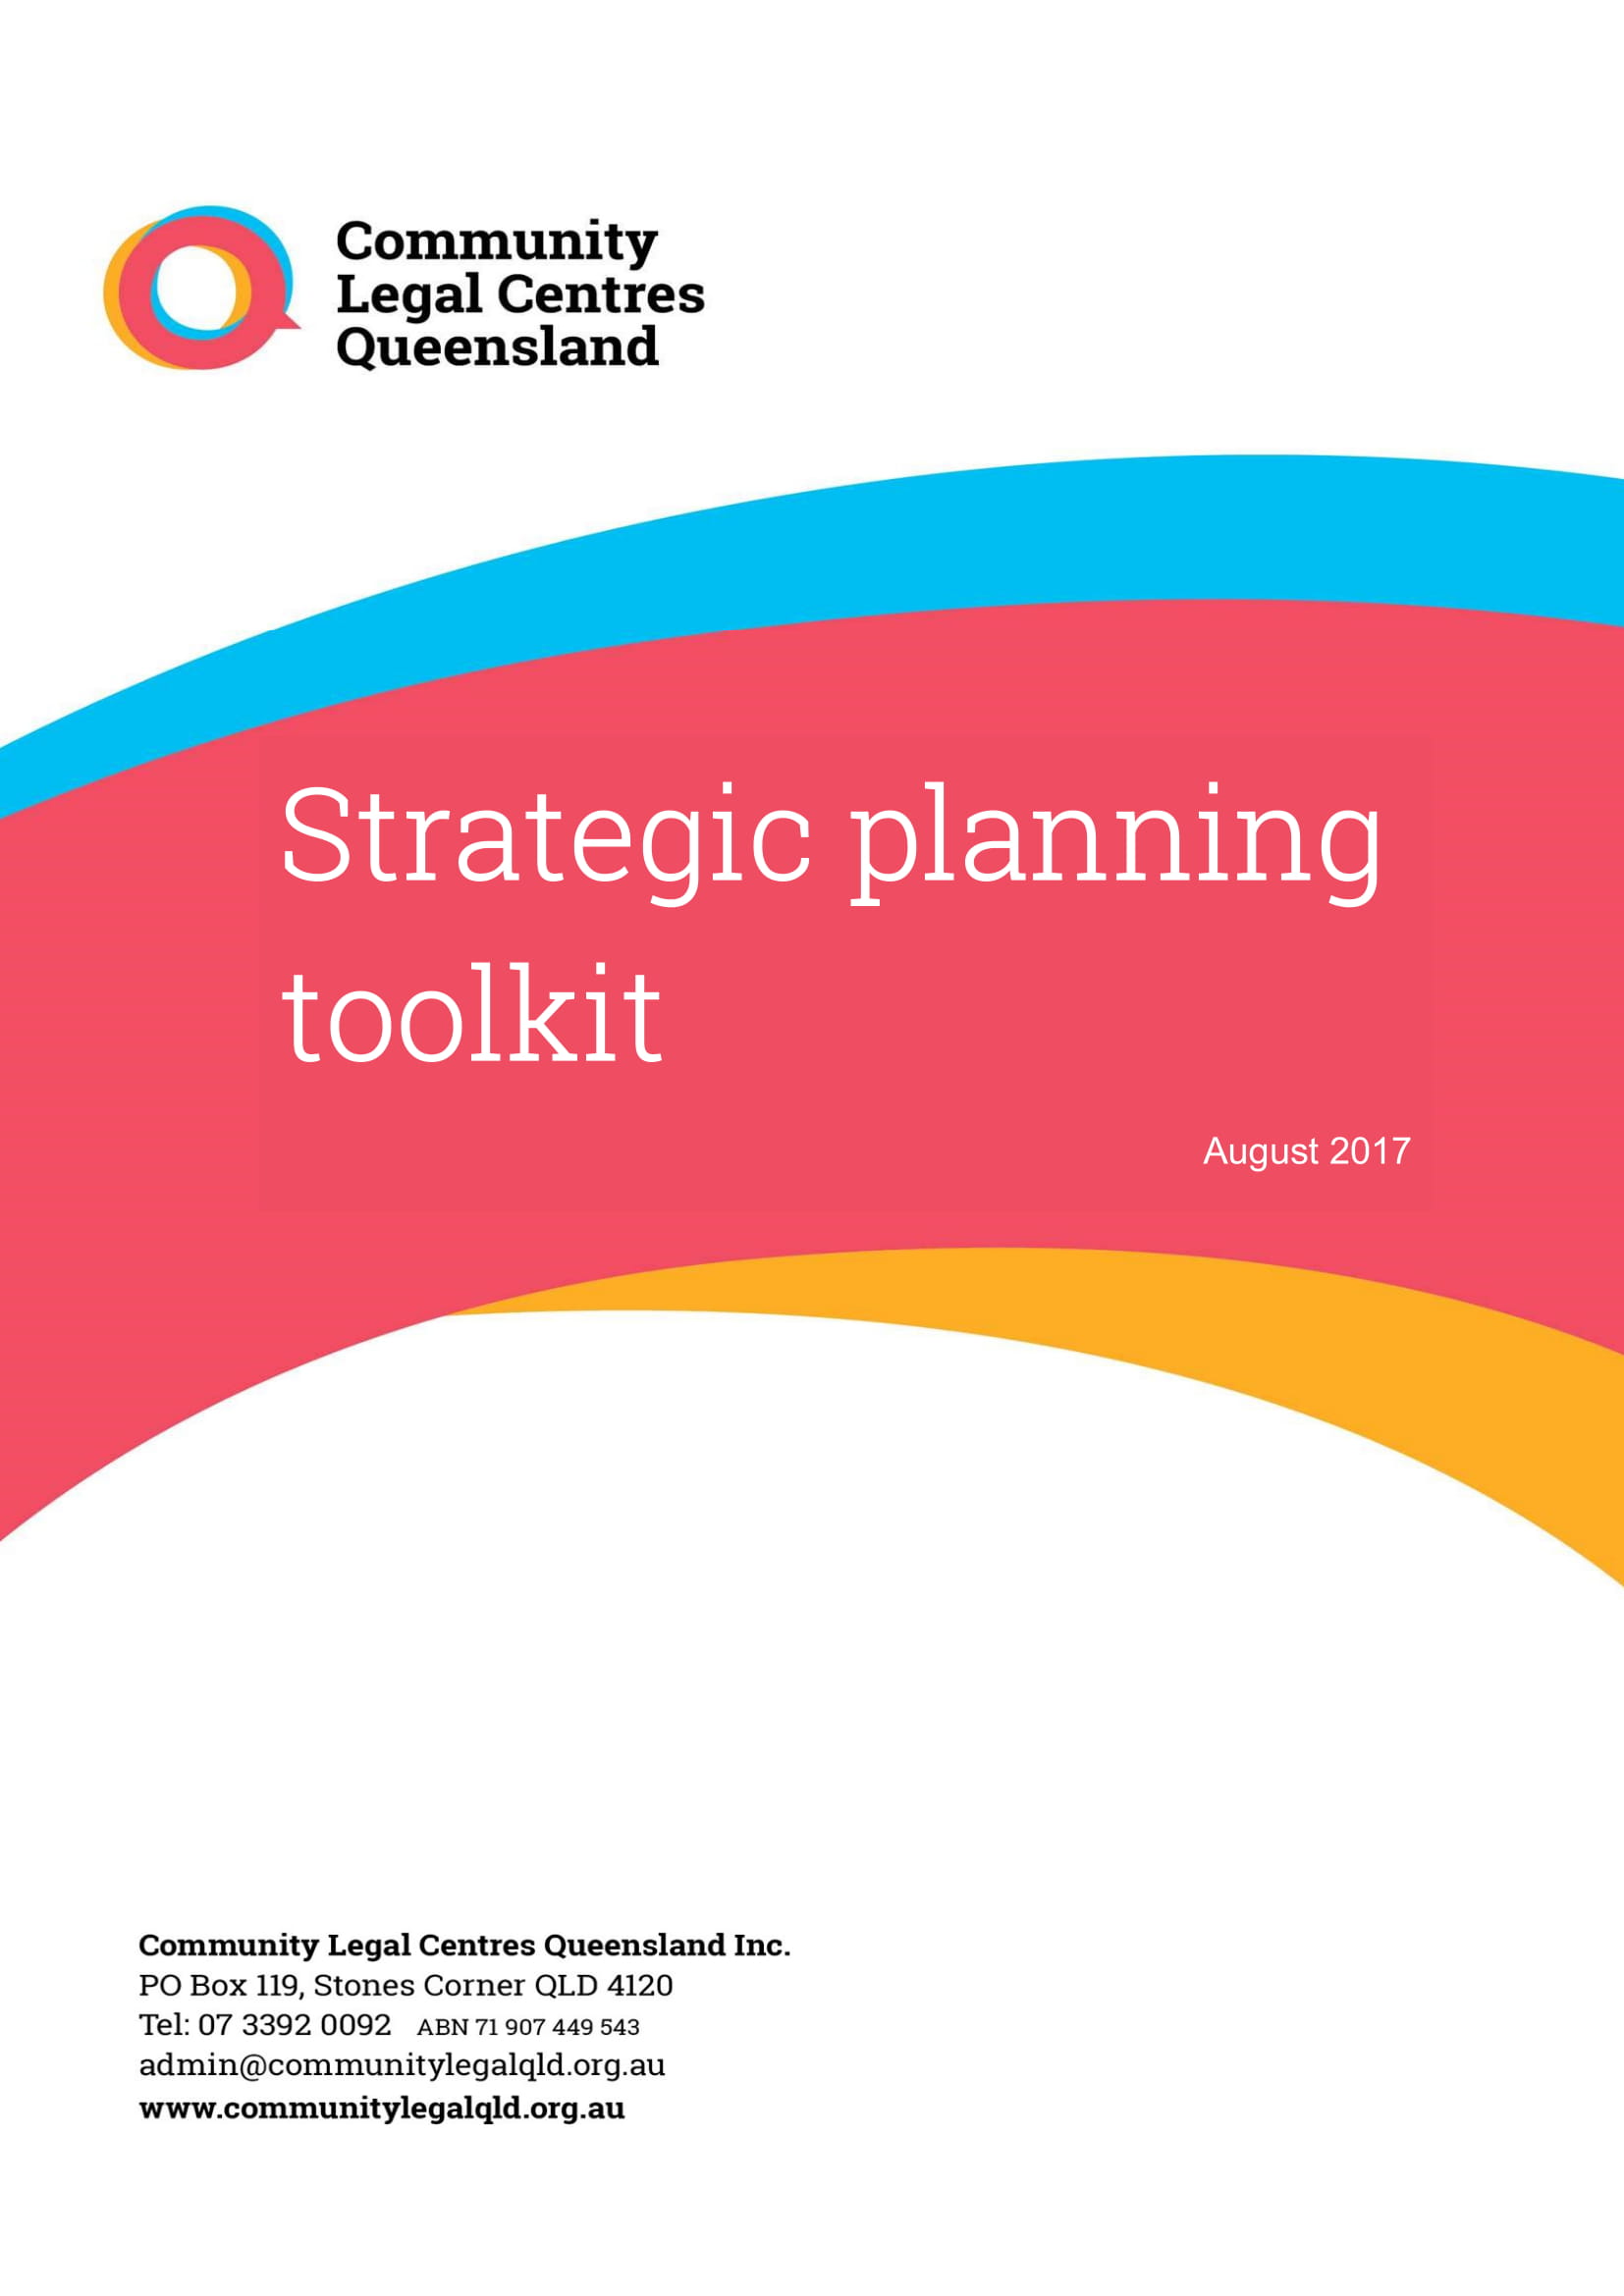 community legal centres strategic planning toolkit example 01